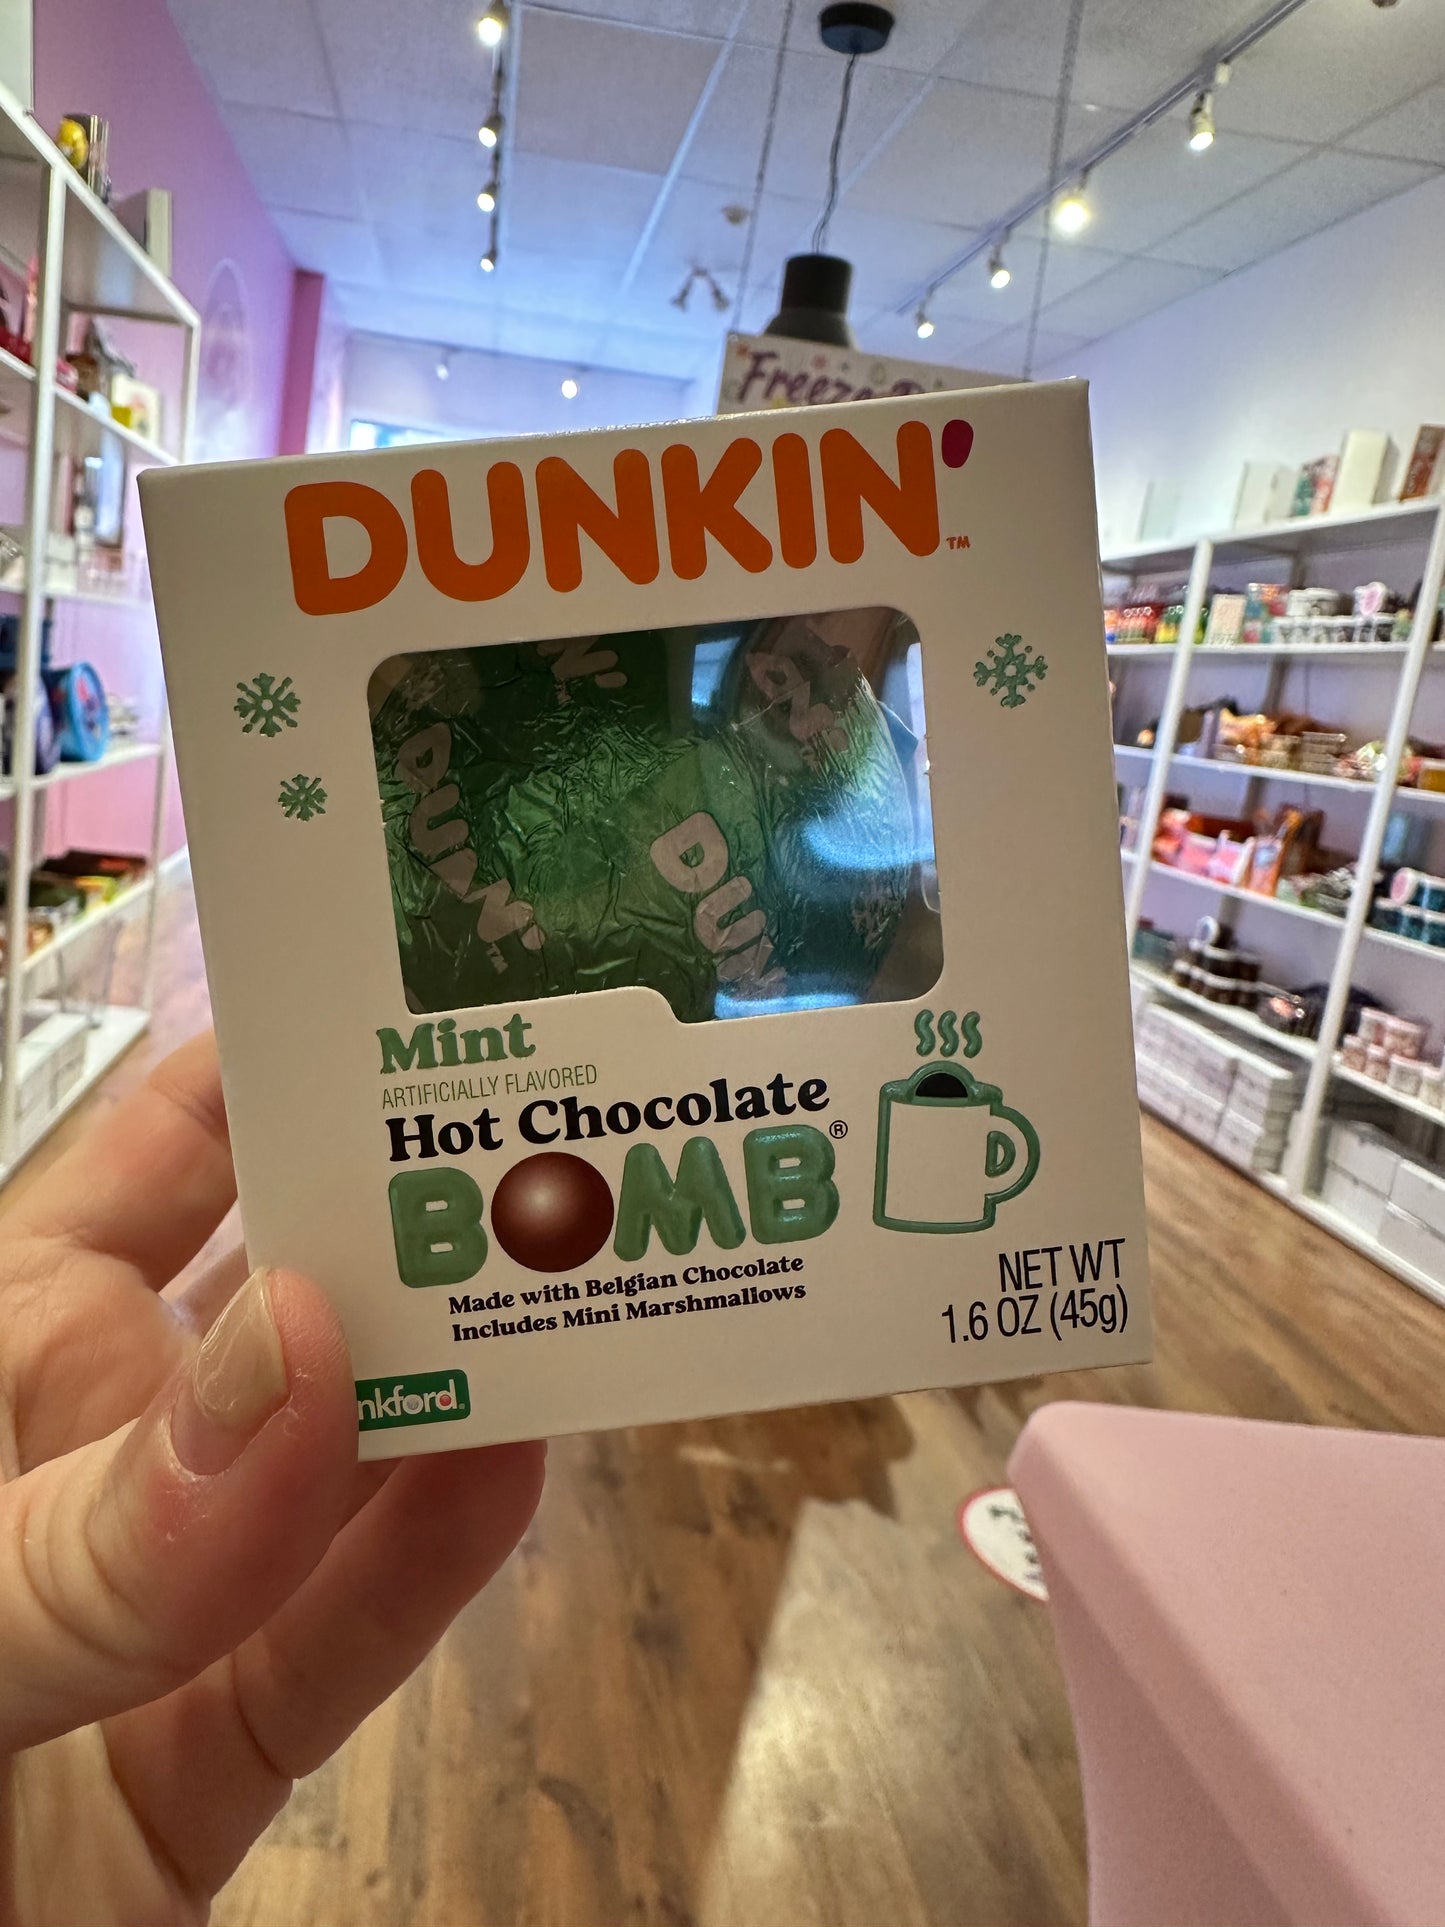 Dunkin’ Hot Chocolate Bomb - Mint